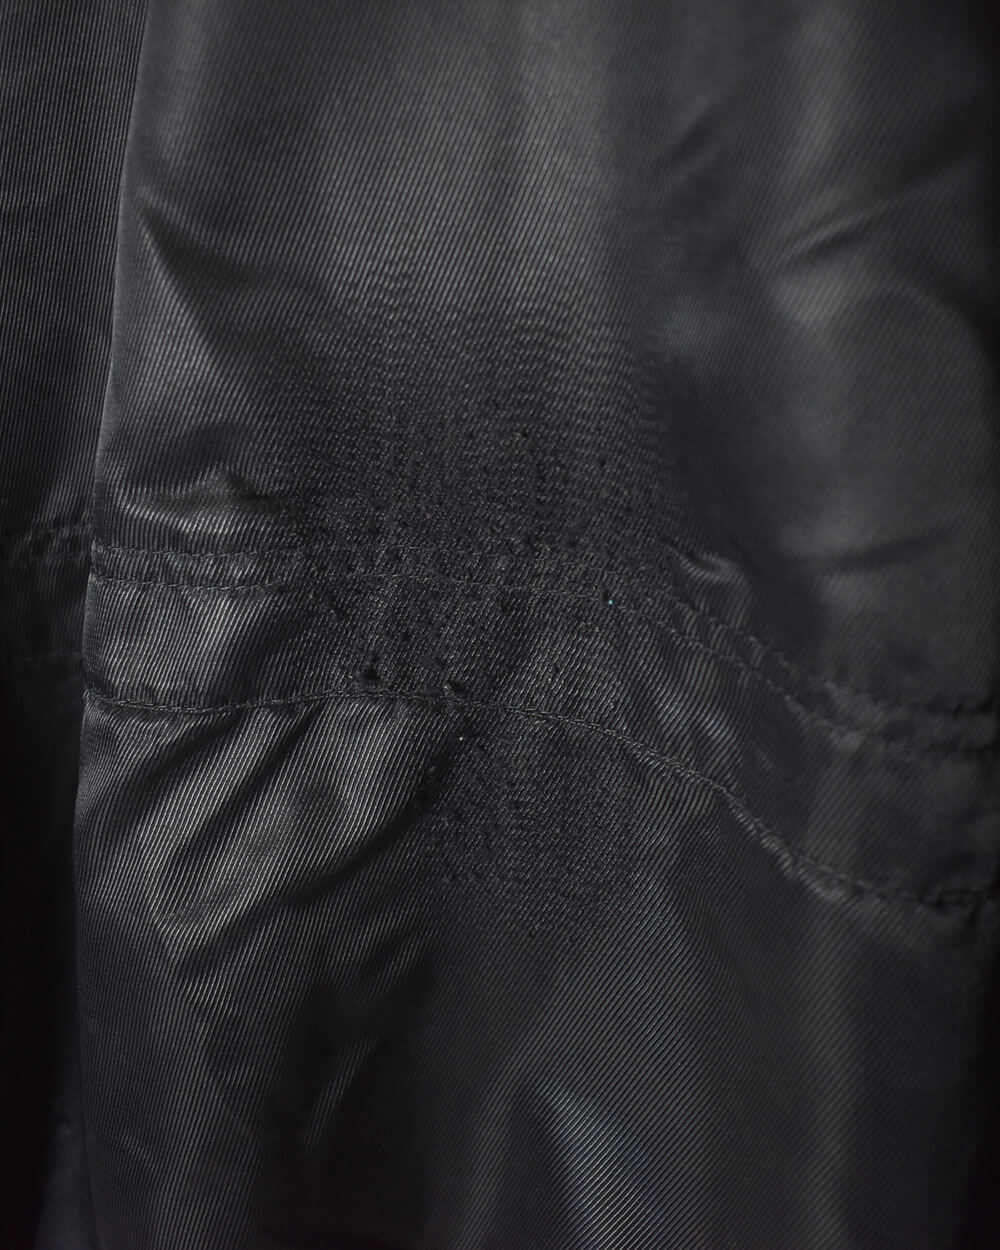 Black Nike Reversible Fleece Lined Jacket - X-Large